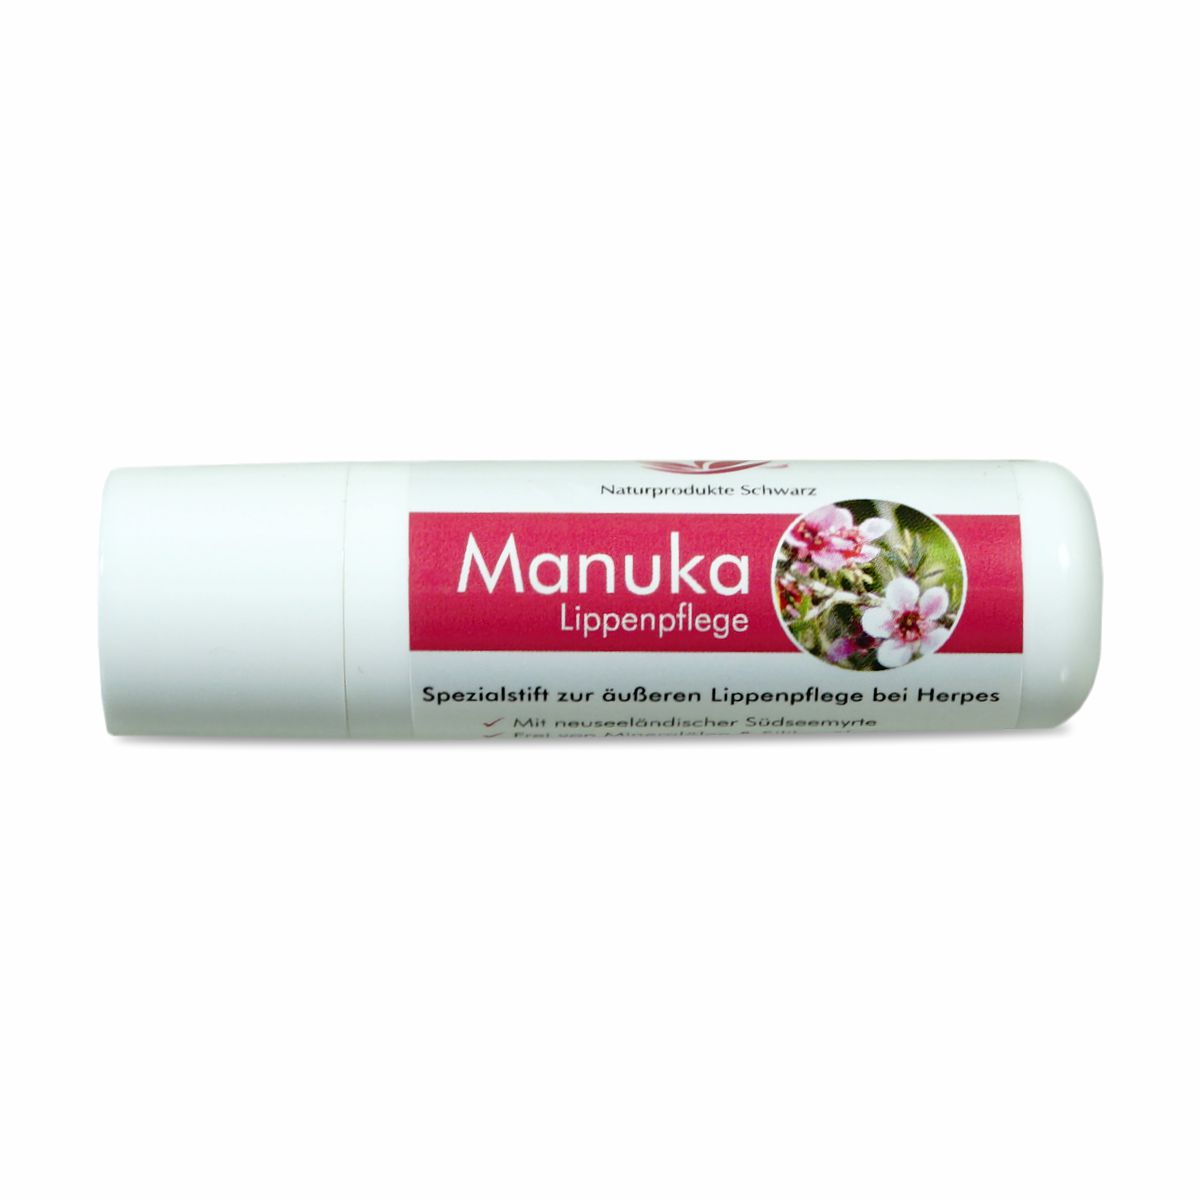 Manuka Lippenpflege - Lippenstift bei Herpes, Lippenherpes